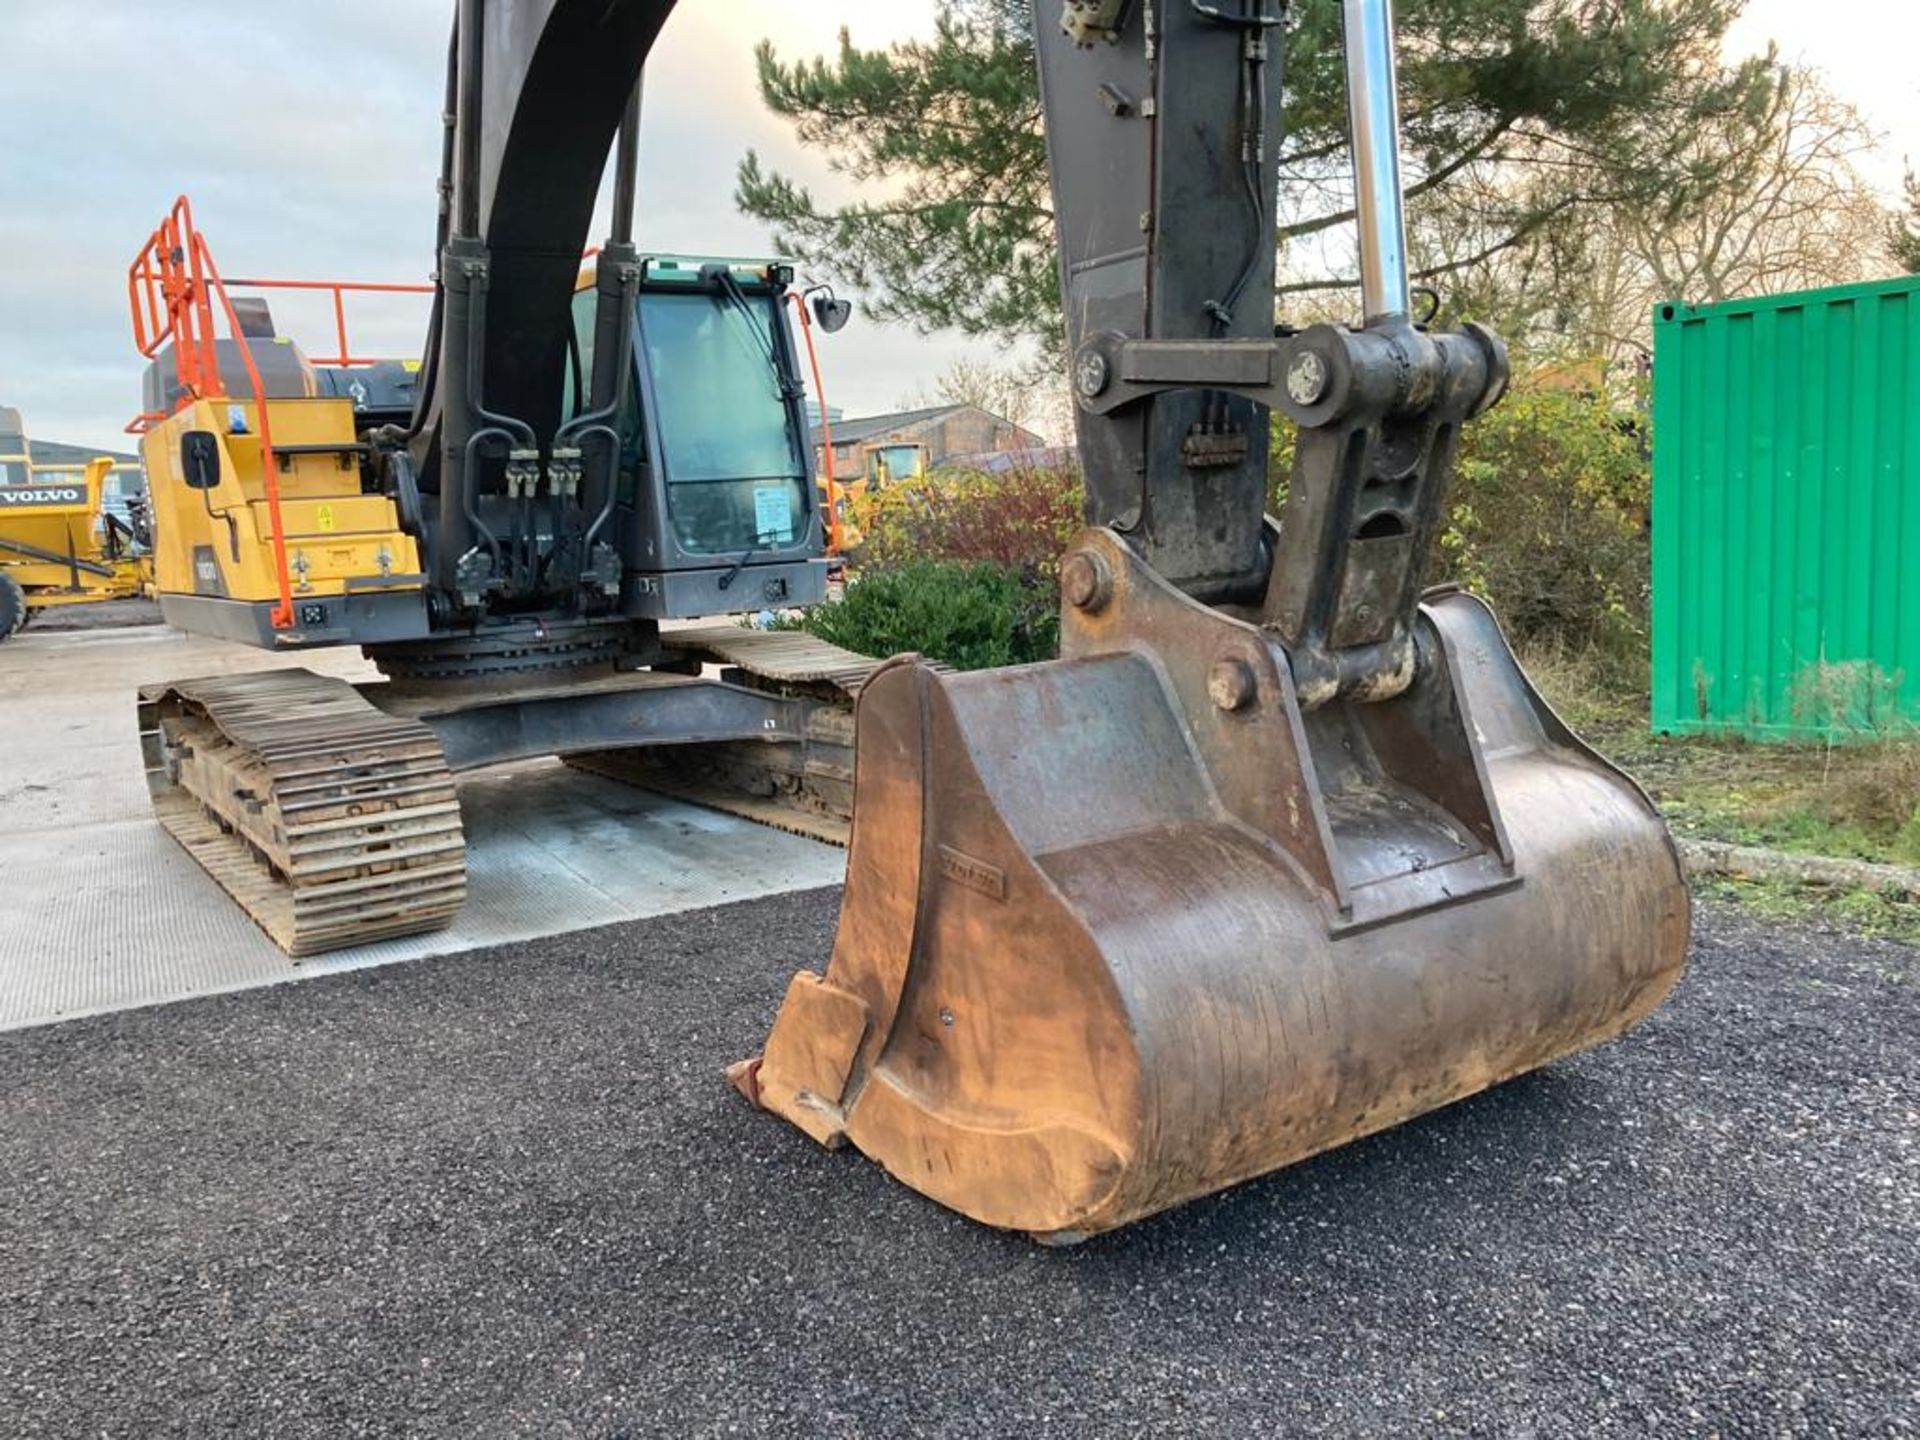 Direct from Volvo Main Dealer, 2018 (EC380EL) Tracked Excavator - Image 22 of 25